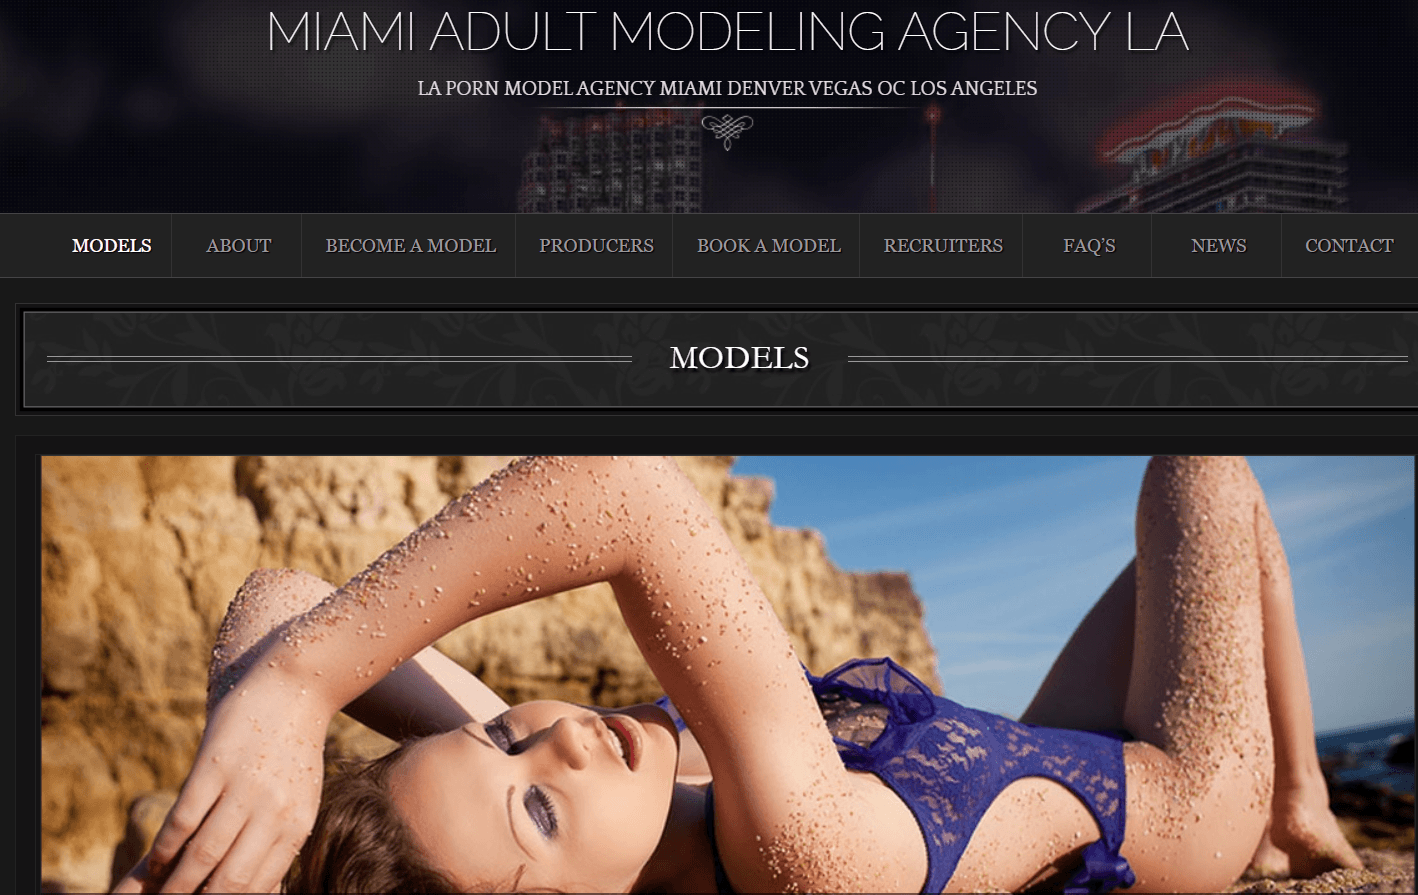 Miami’s Models